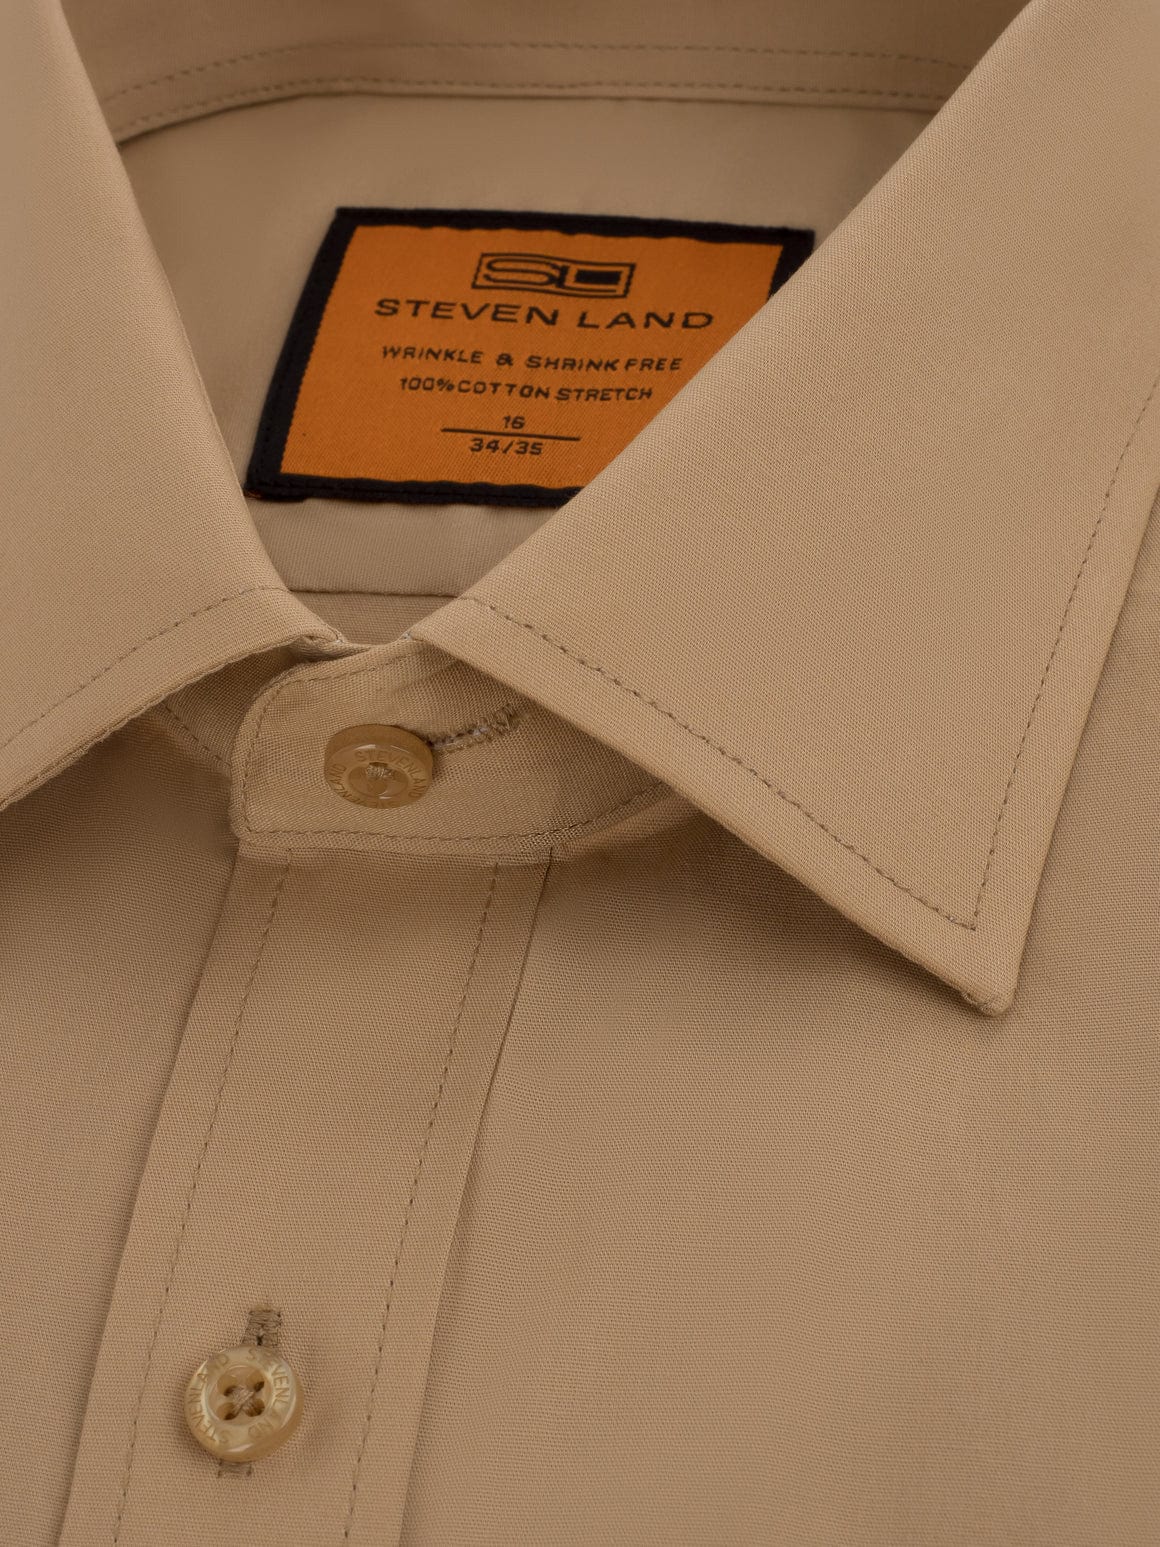 LND NECKWEAR INC. S CF Steven Land Dress Shirt| Classic Fit | French Cuff | 100% Cotton/Ds115f 4/5